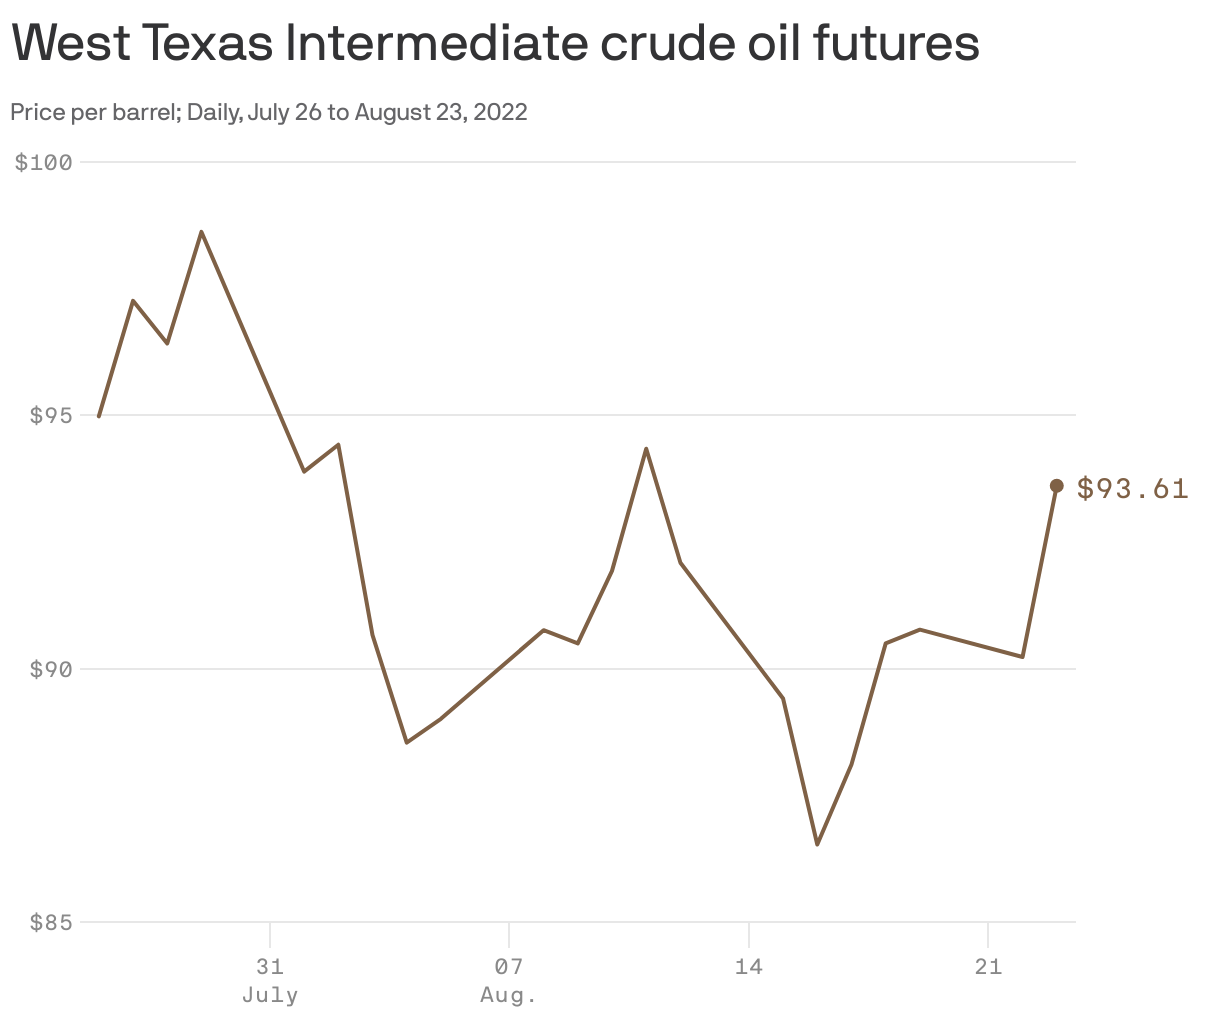 West Texas Intermediate crude oil futures